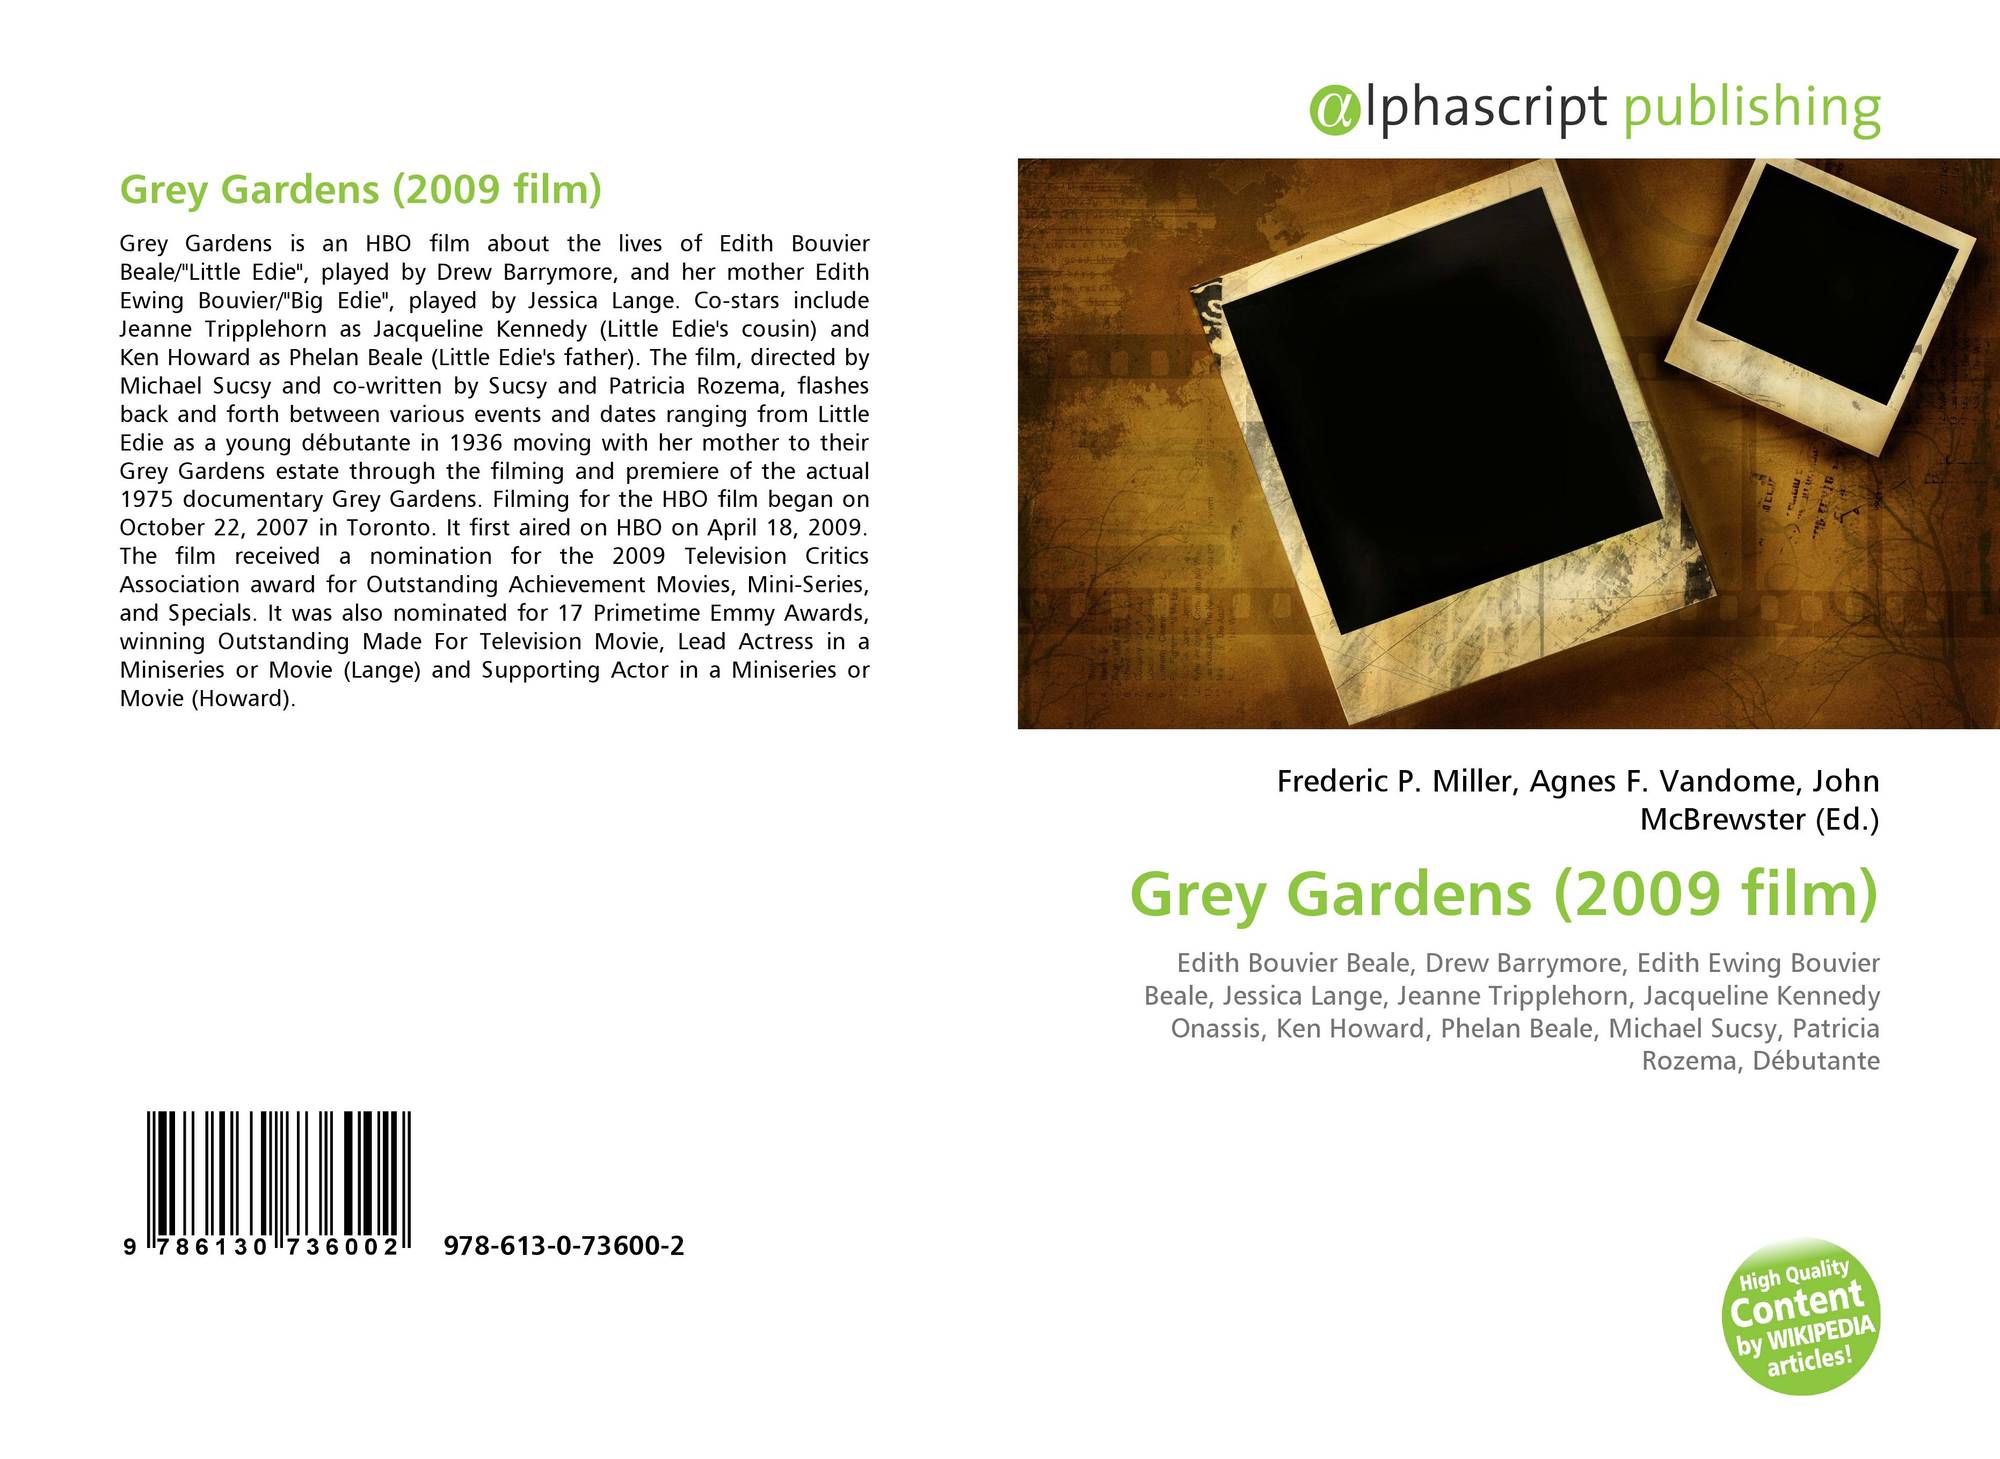 Grey Gardens 2009 Film 978 613 0 73600 2 6130736002 9786130736002